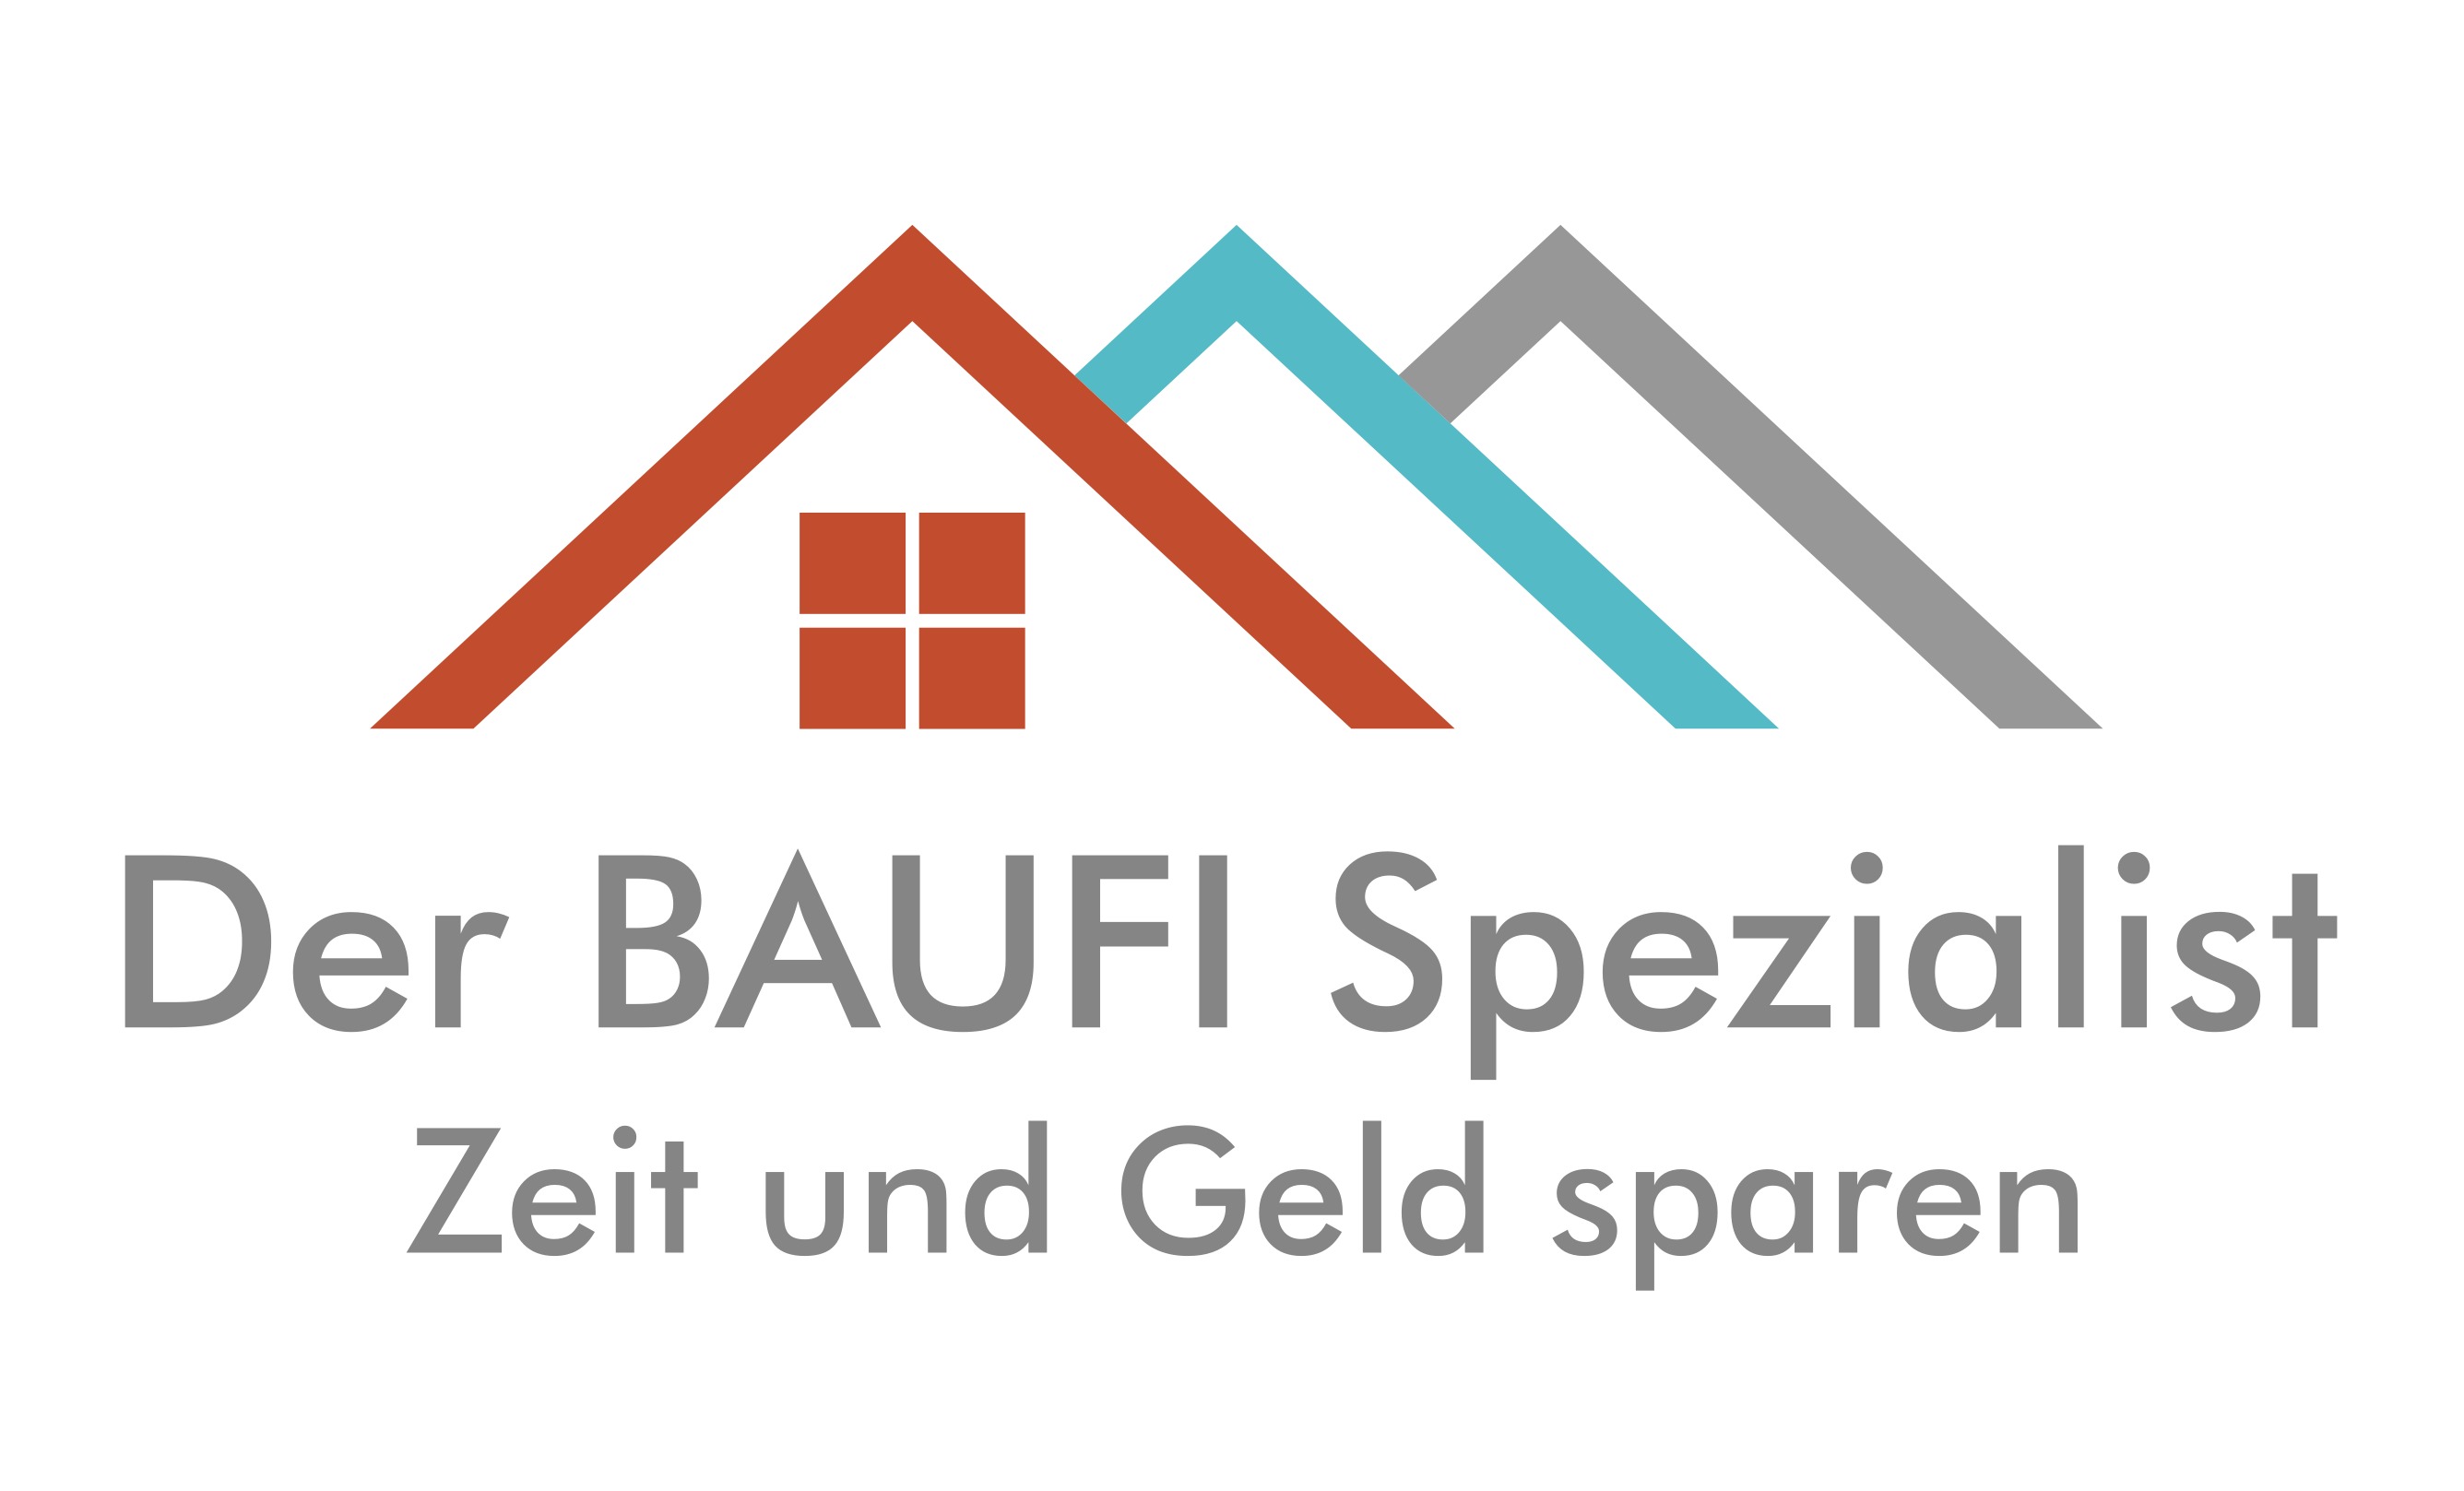 Der BAUFI Spezialist, ungebundene Baufinanzierungs-Beratung Logo